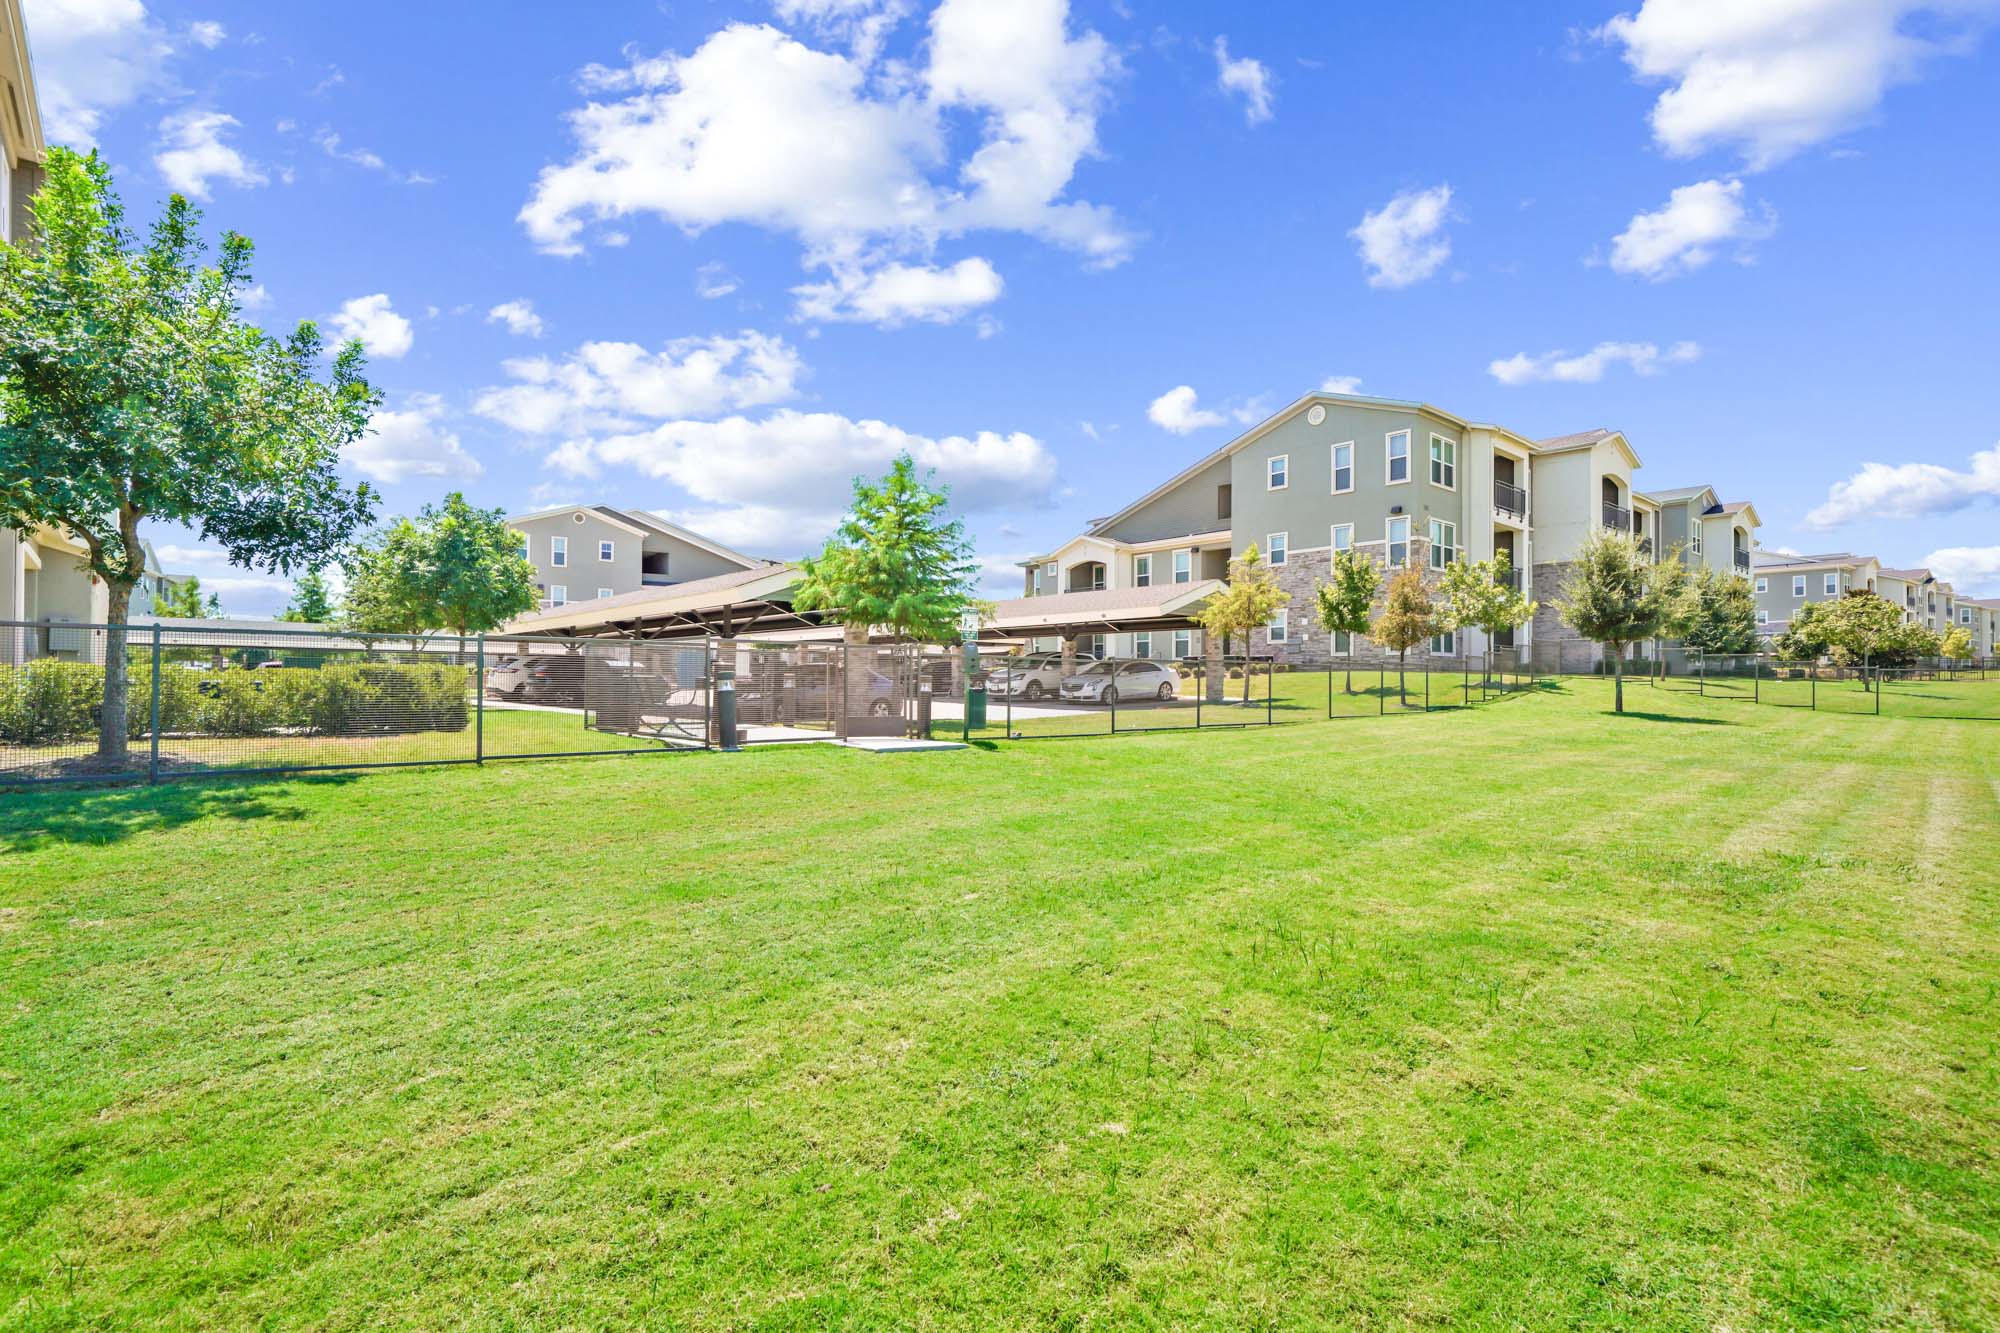 The lawn at Embree Hill apartments in Dallas, TX.